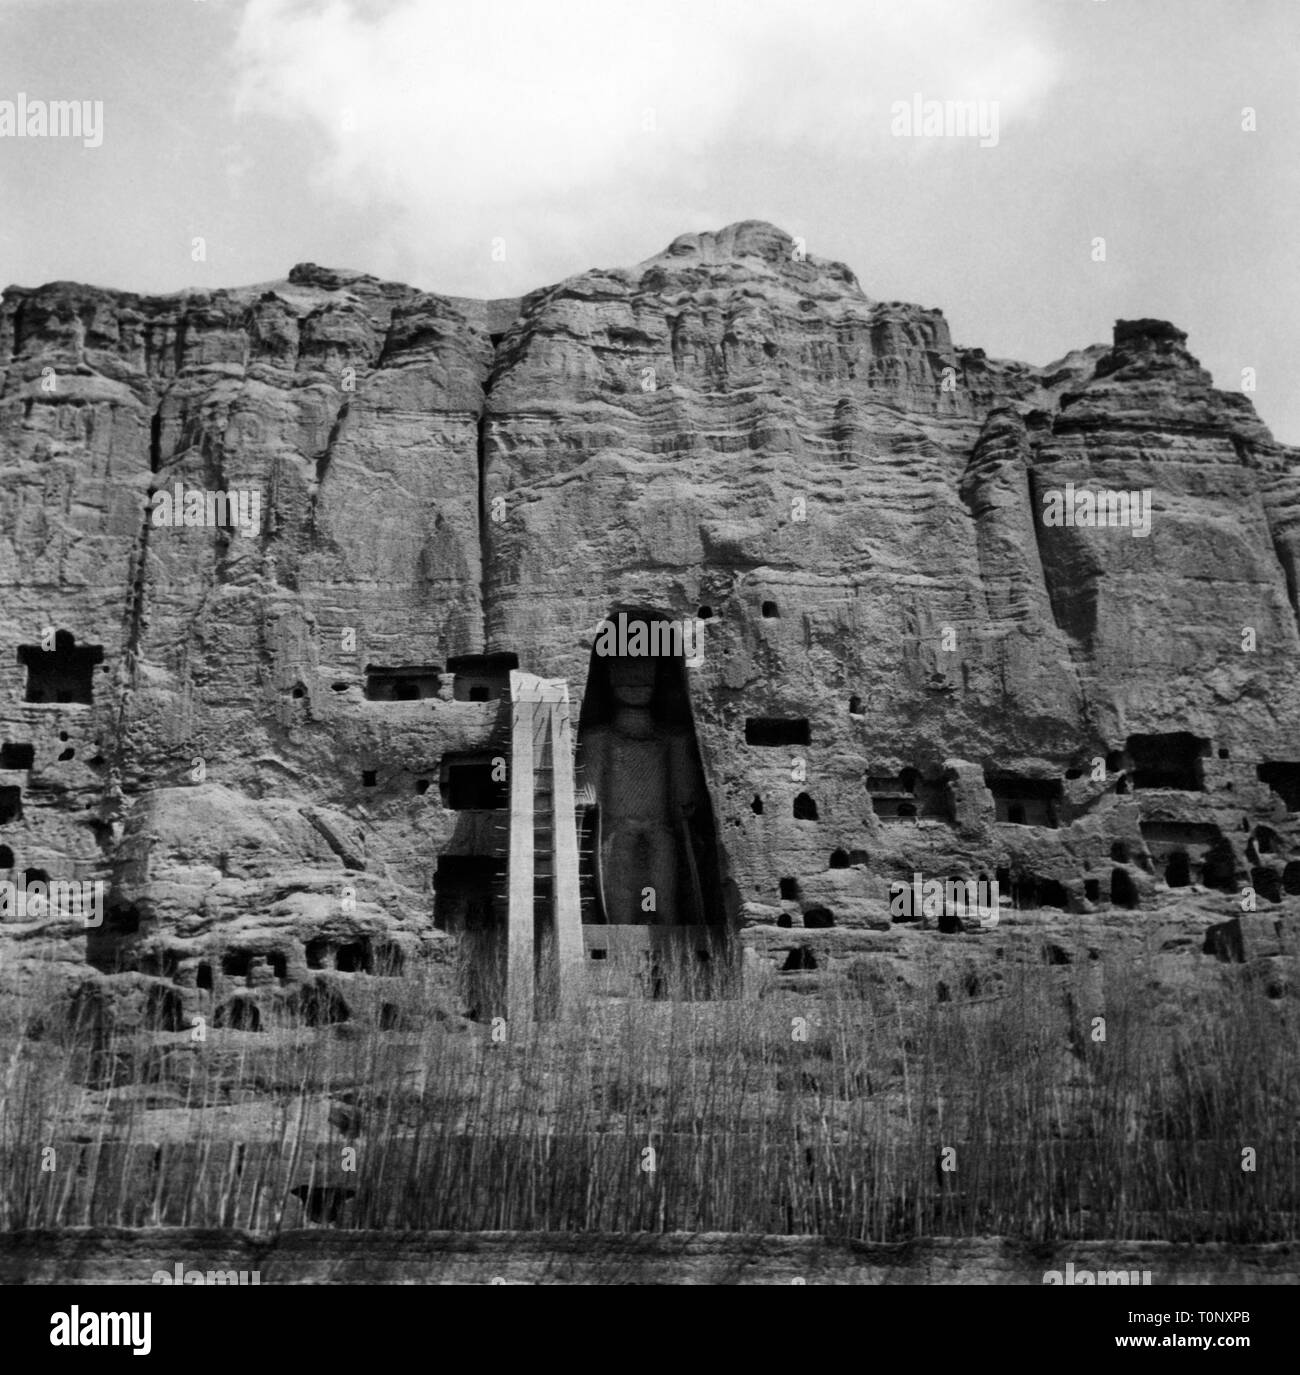 Bamiyan buddha Black and White Stock Photos & Images - Alamy